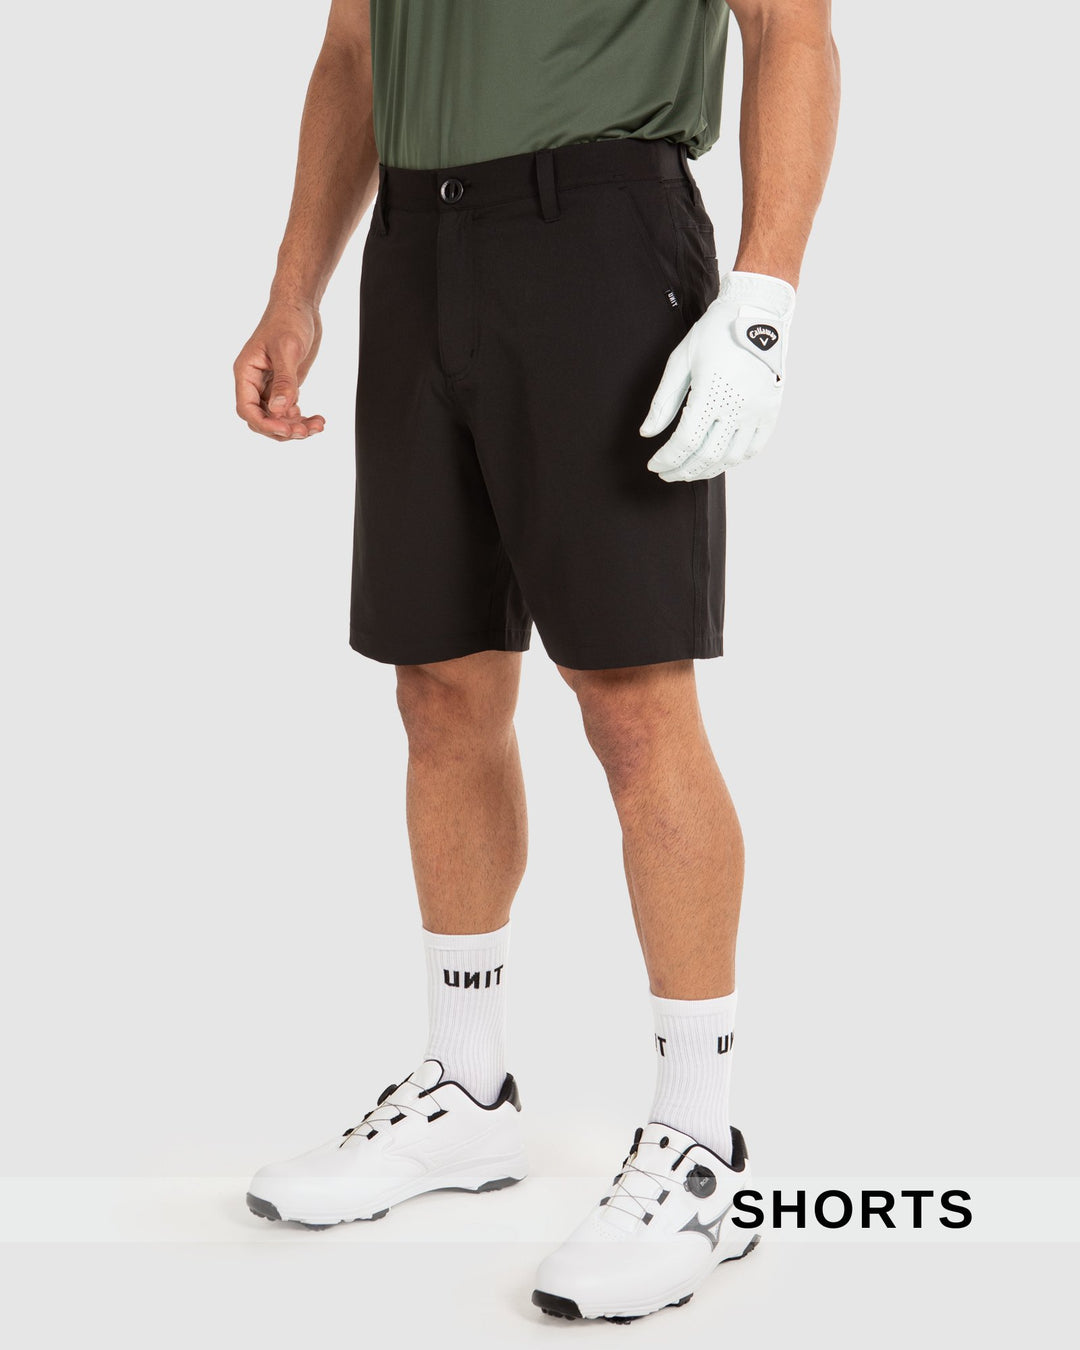 Mens Golf Shorts Bundle